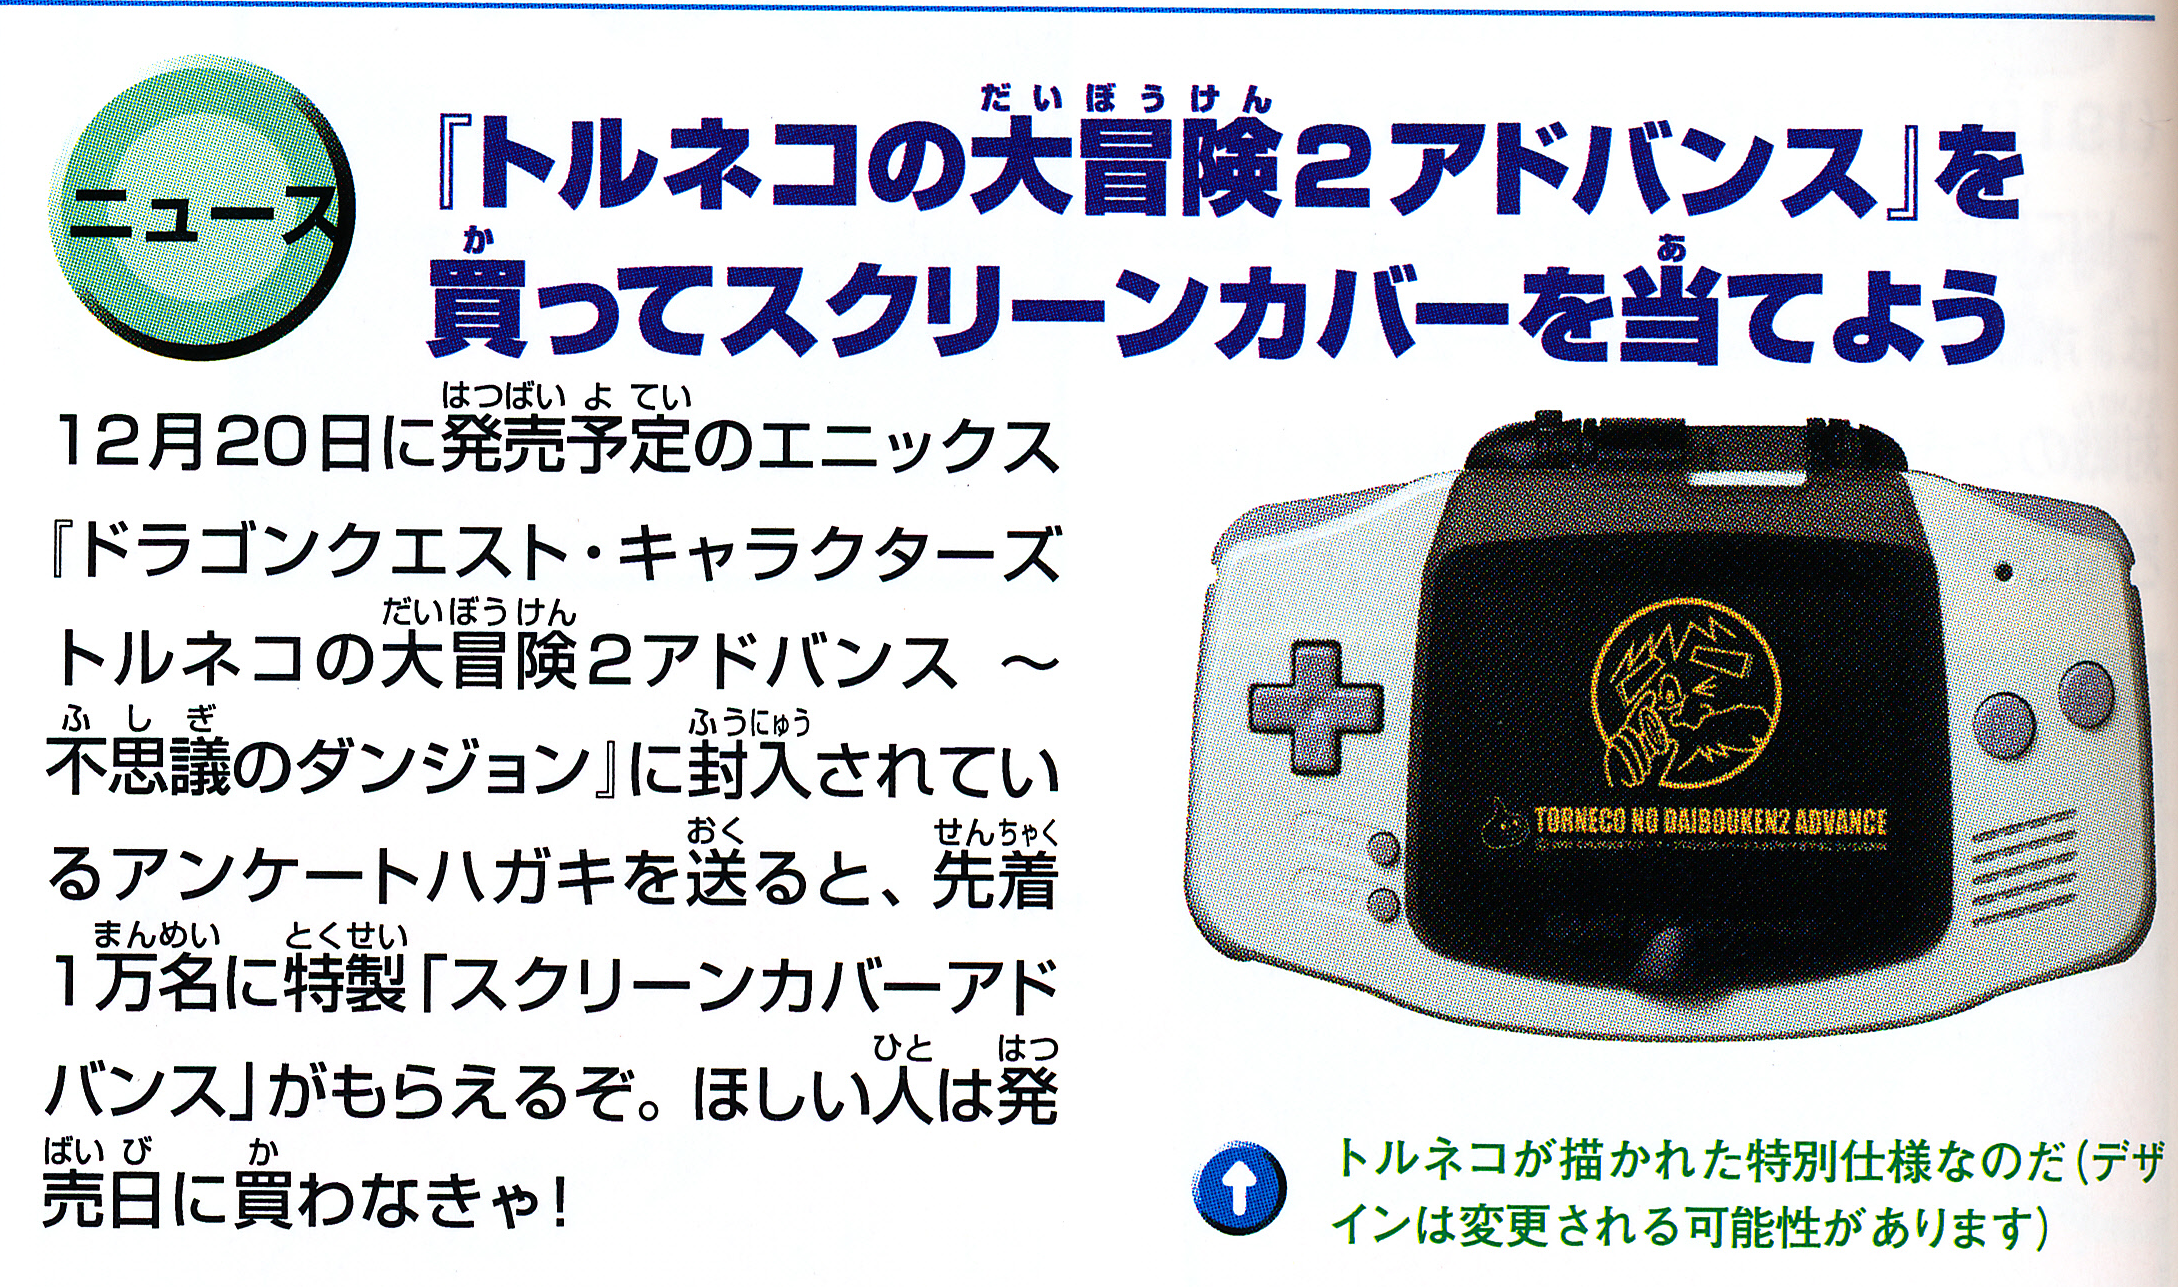  Nintendo Game Boy Advance Torneko no Daibouken 2 Advance Screen Cover [JP]